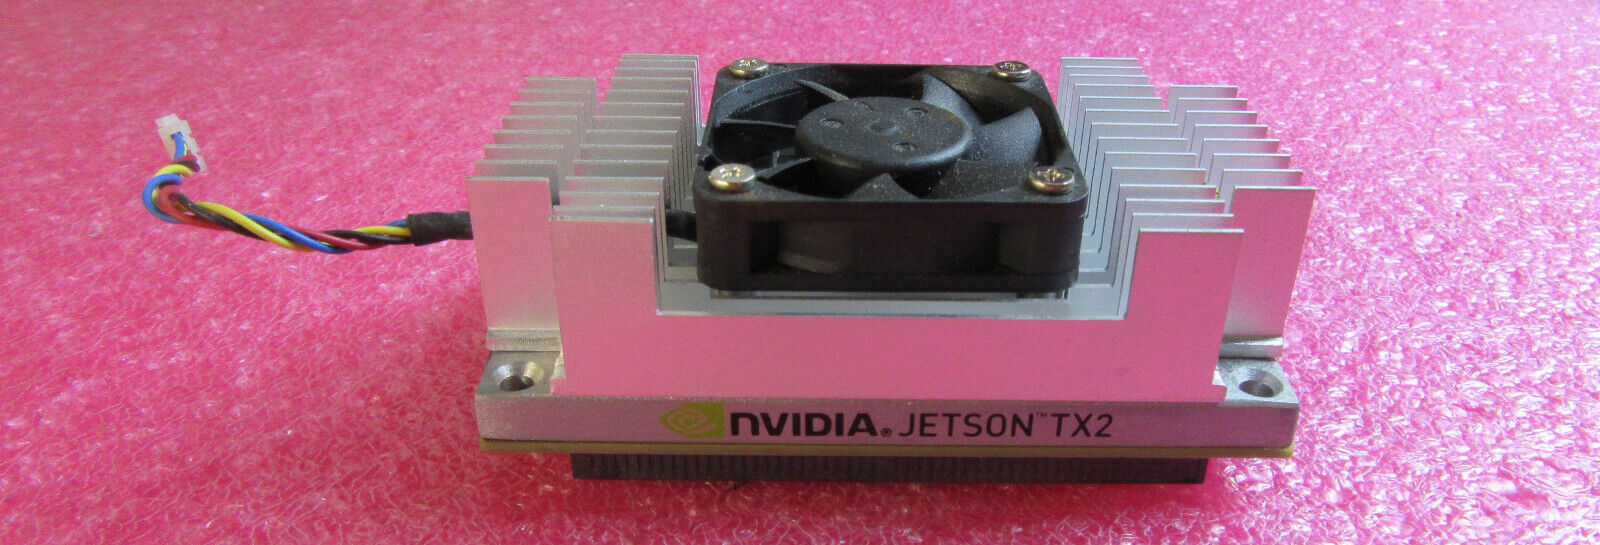 Nvidia P3310 8GB SOM Module Jetson TX2 135-0807-000 R2 699-83310-1000-B02 E